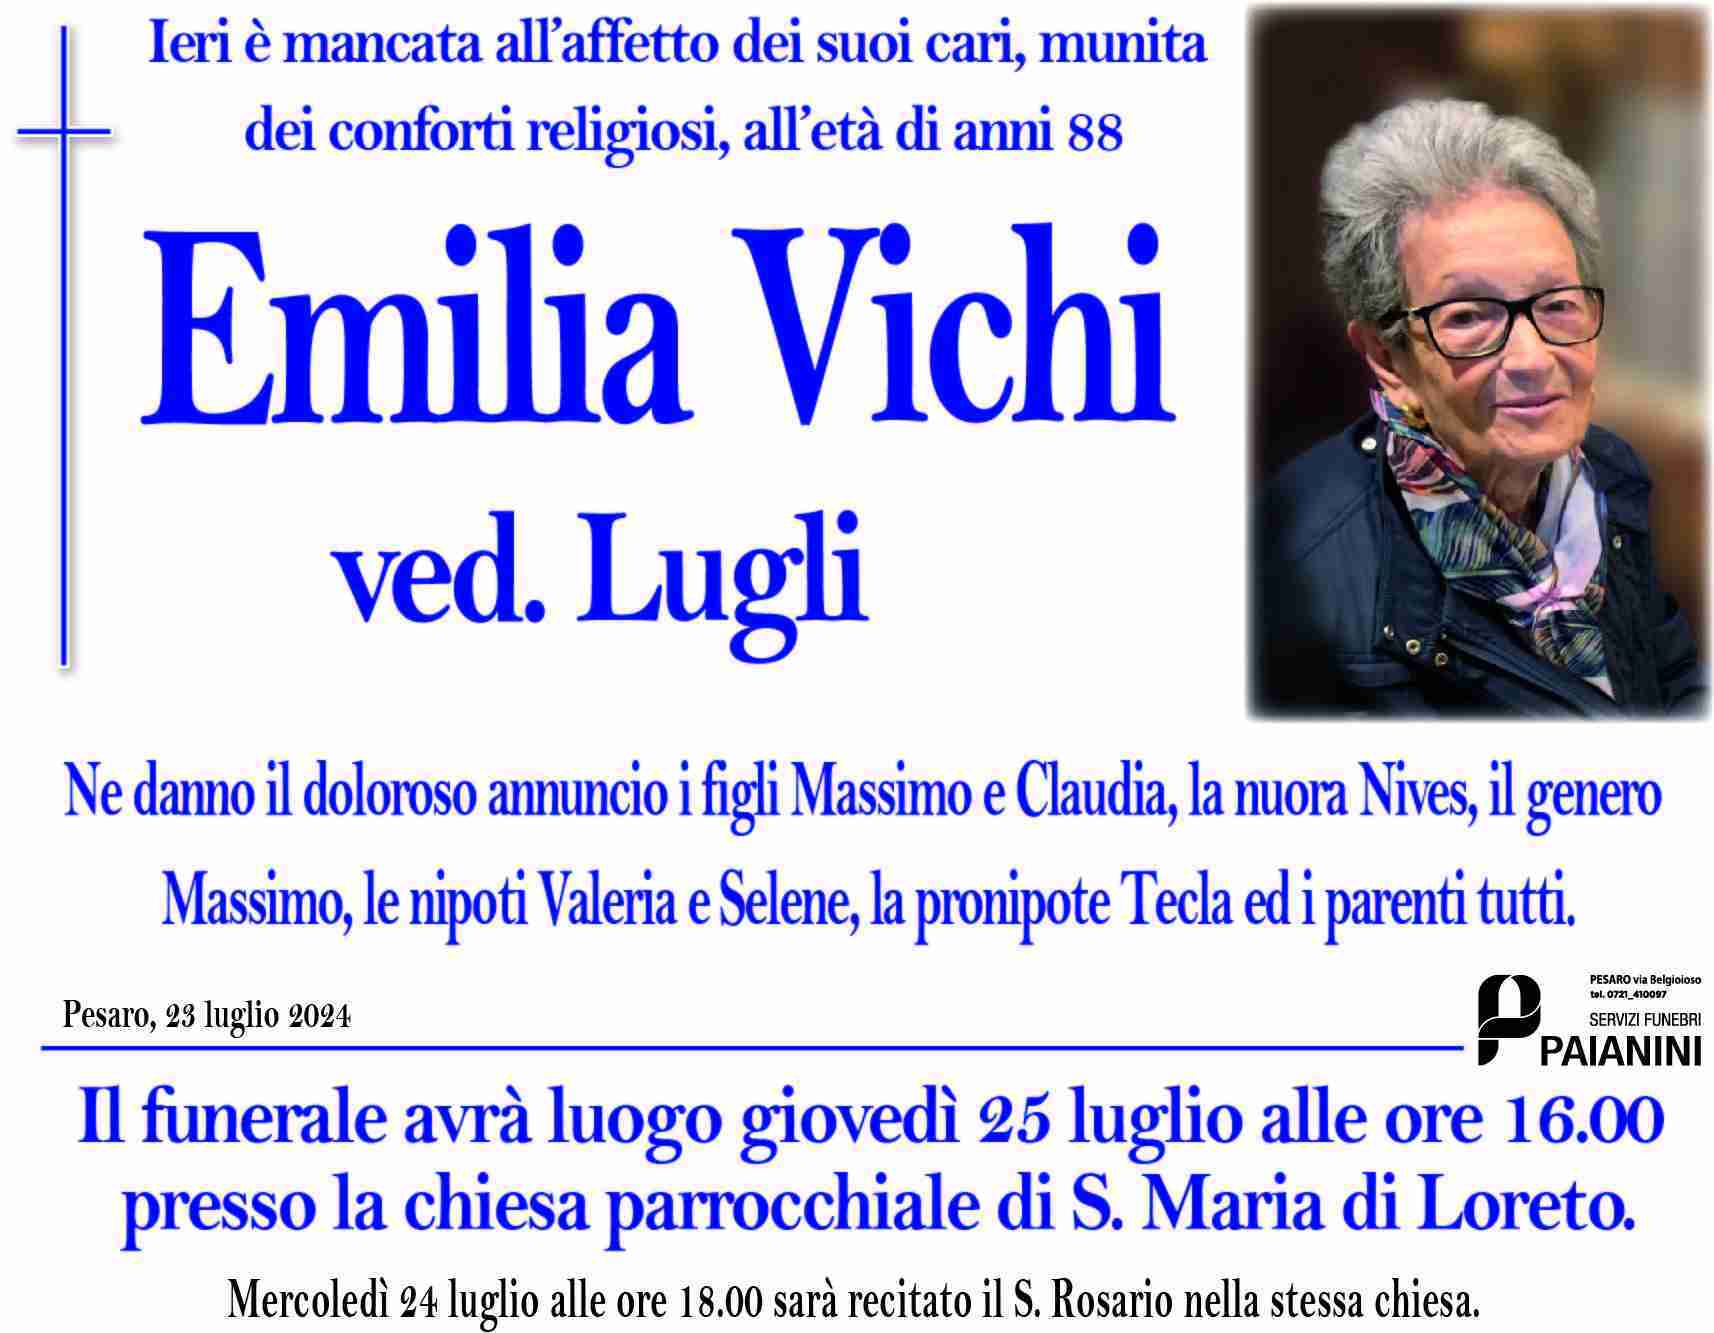 Emilia Vichi